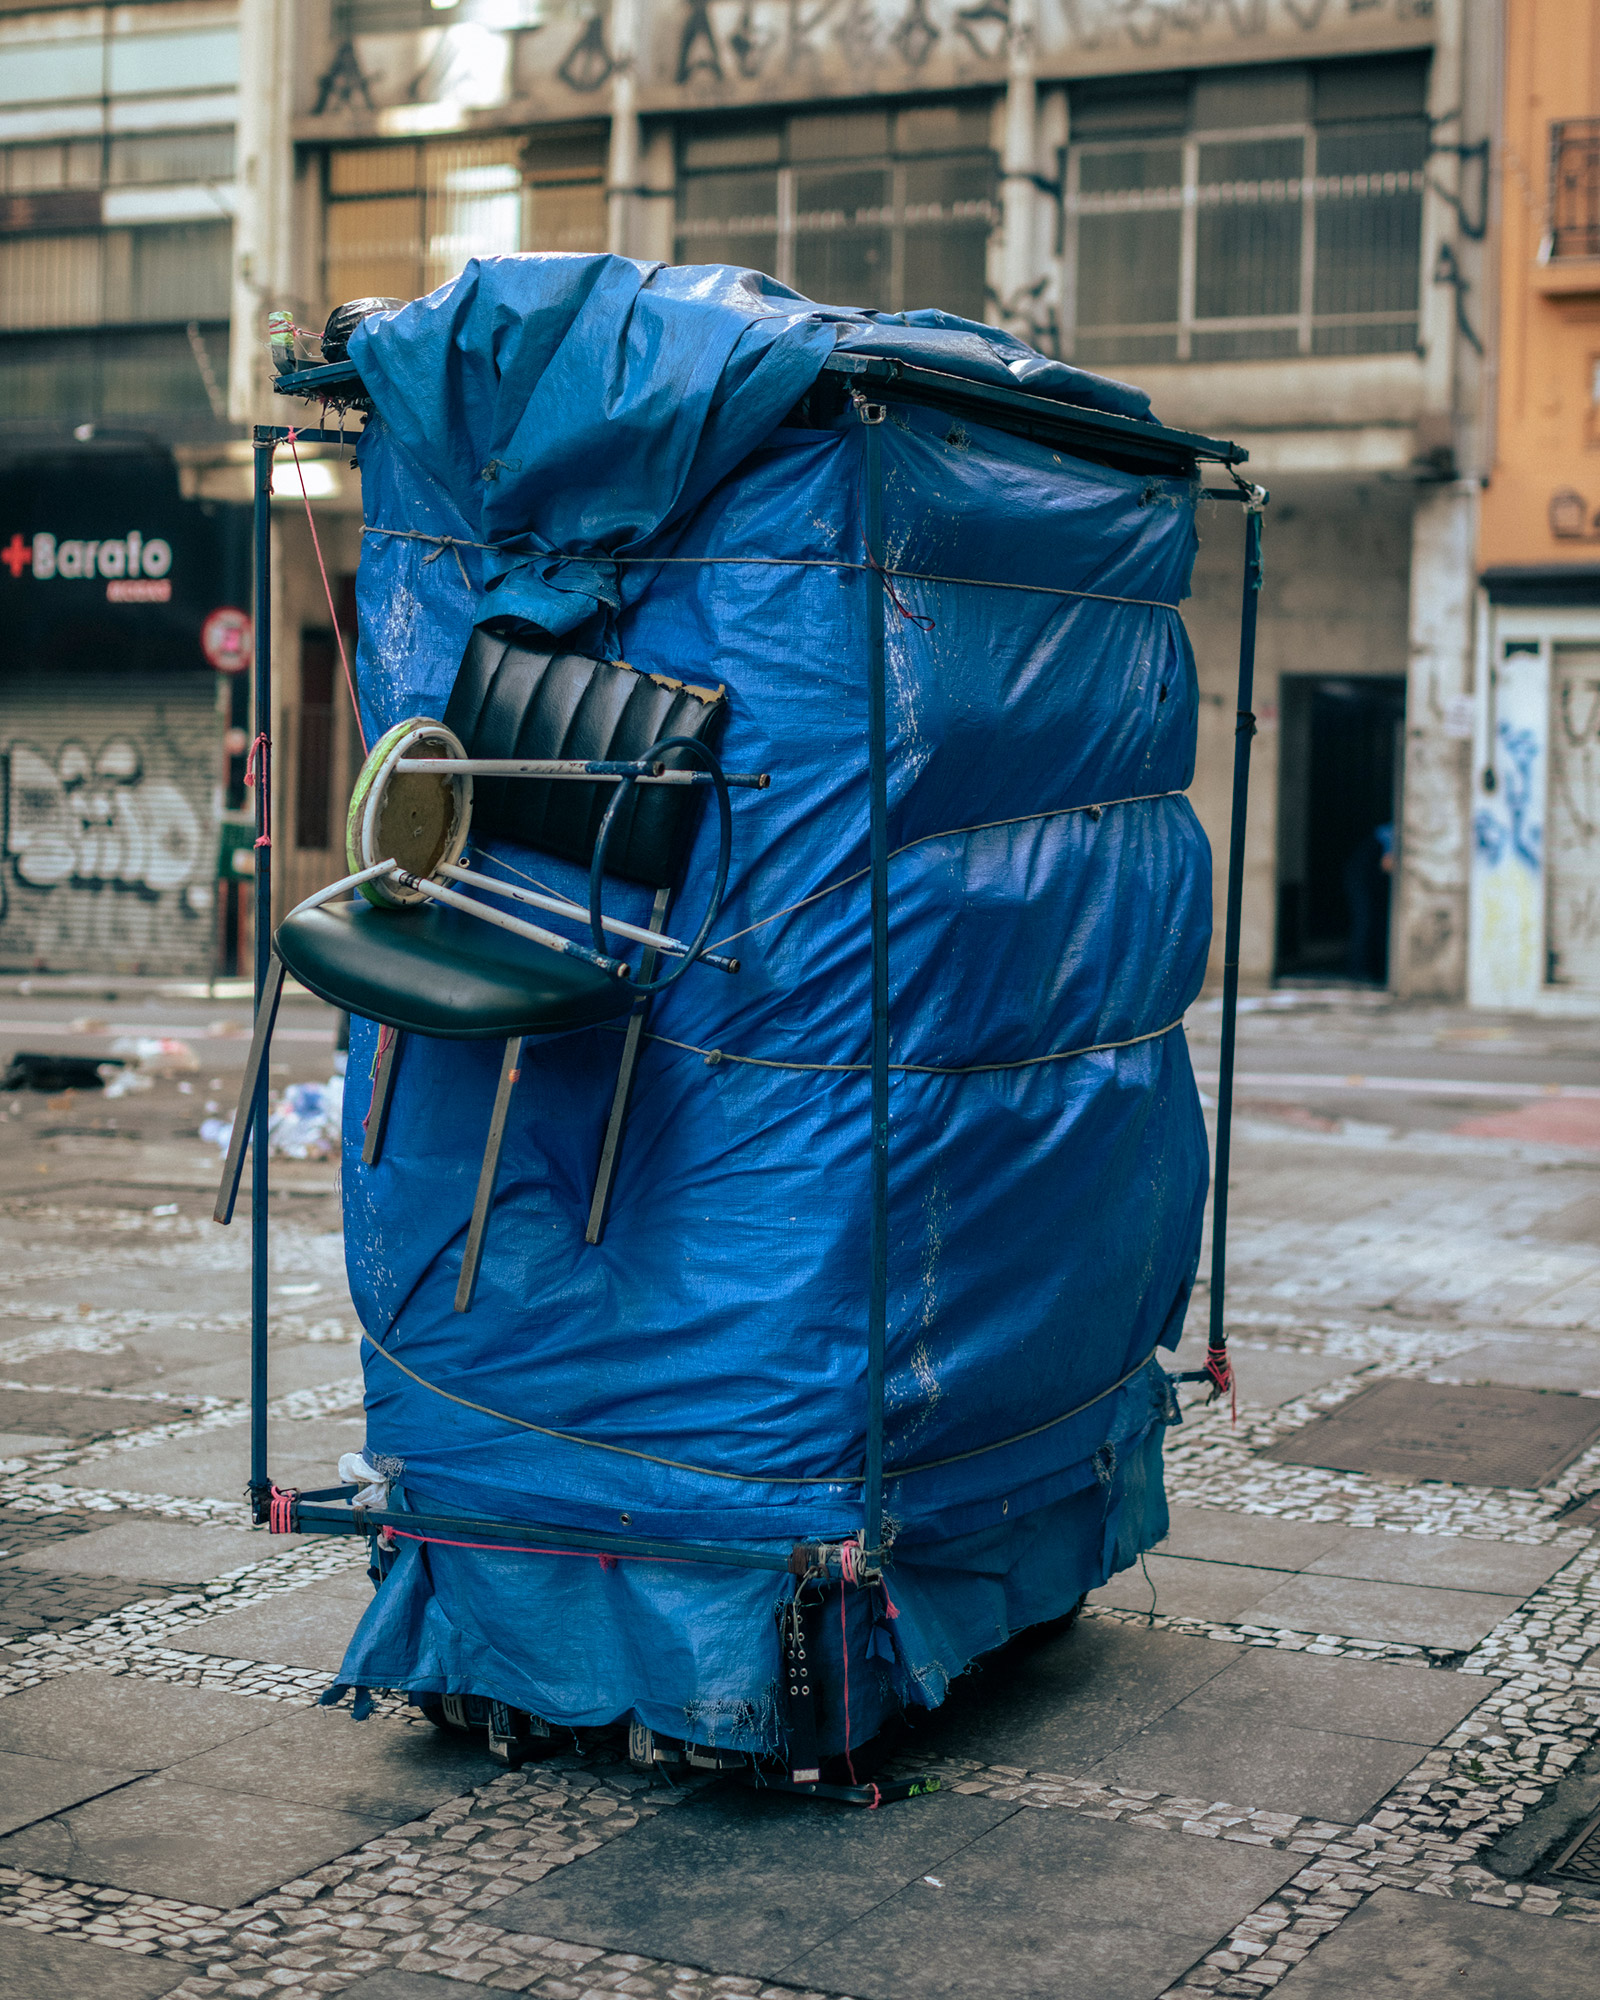 Street vendor's tent